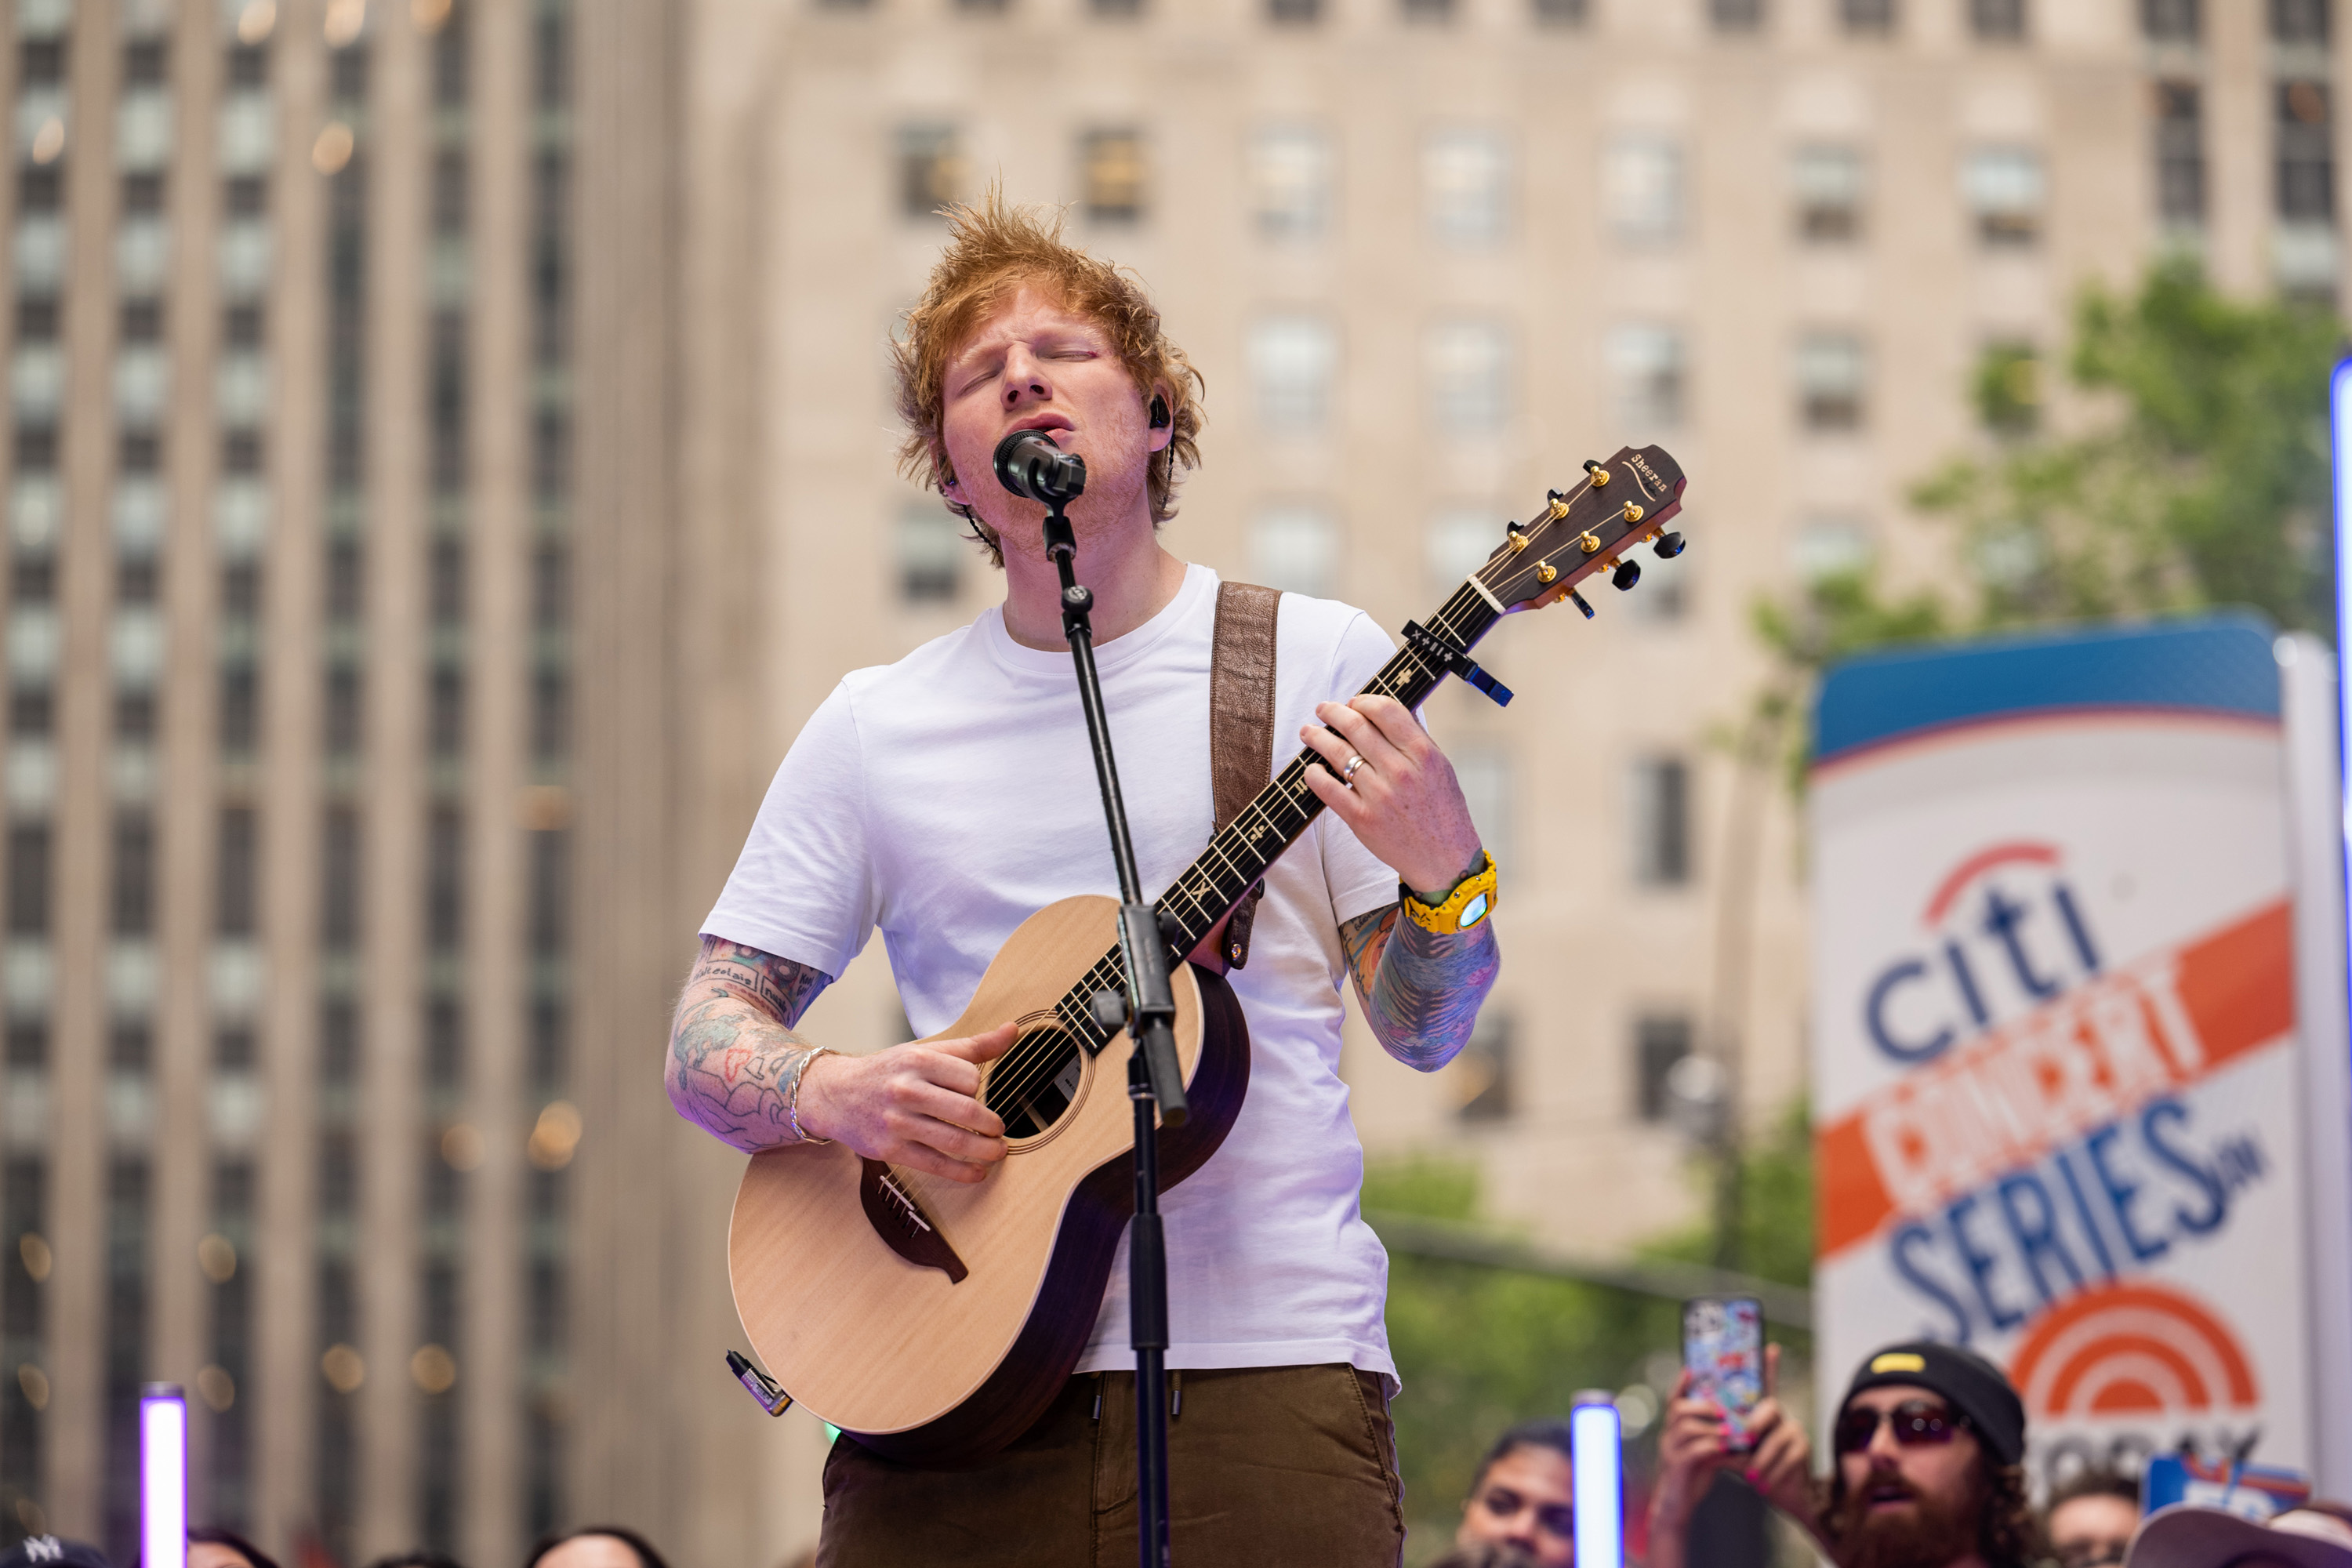 Ed Sheeran Warns Against AI